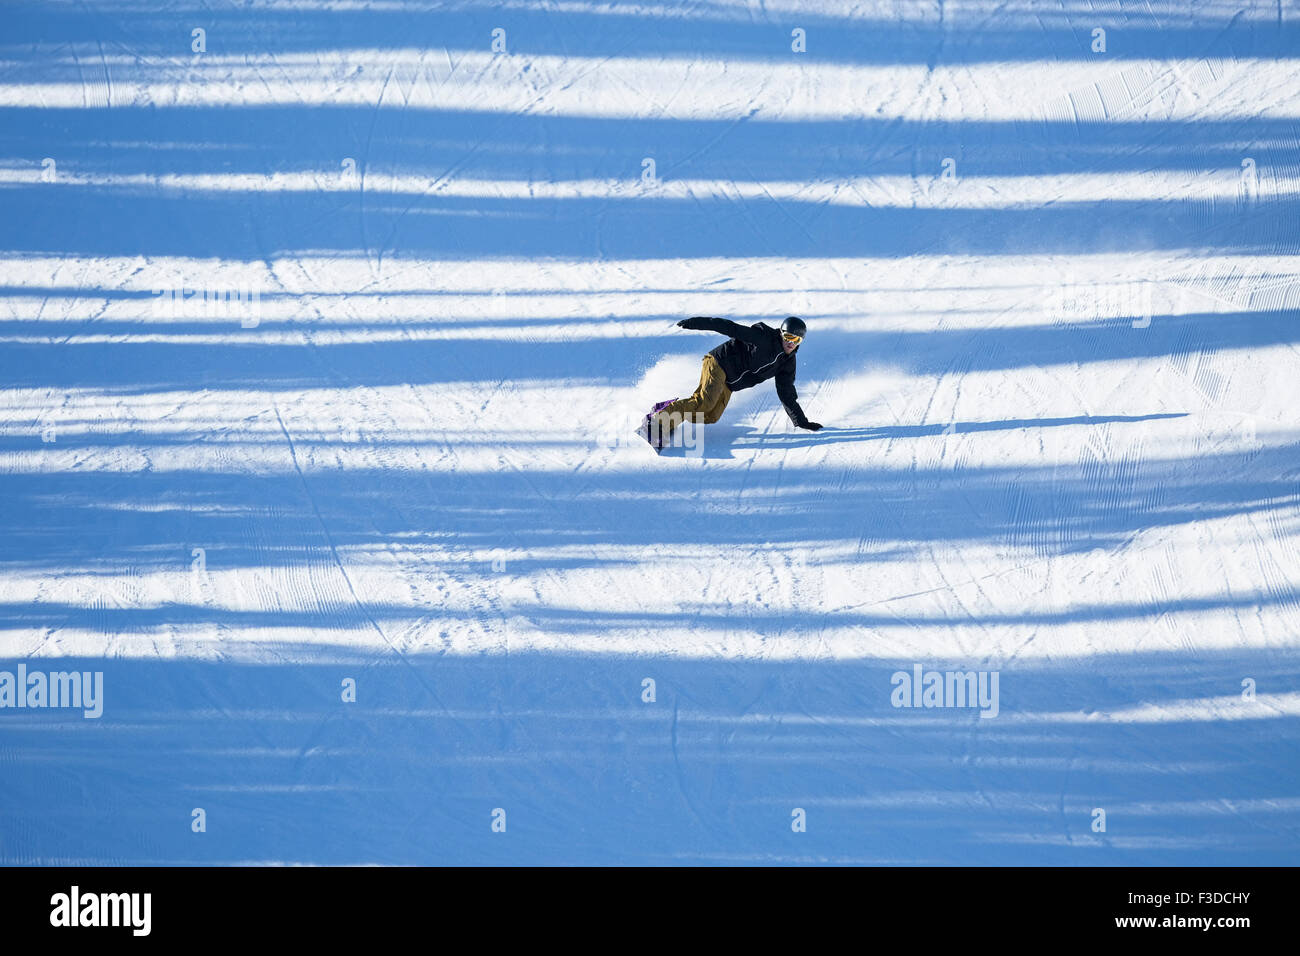 Man snowboarding downhill Stock Photo